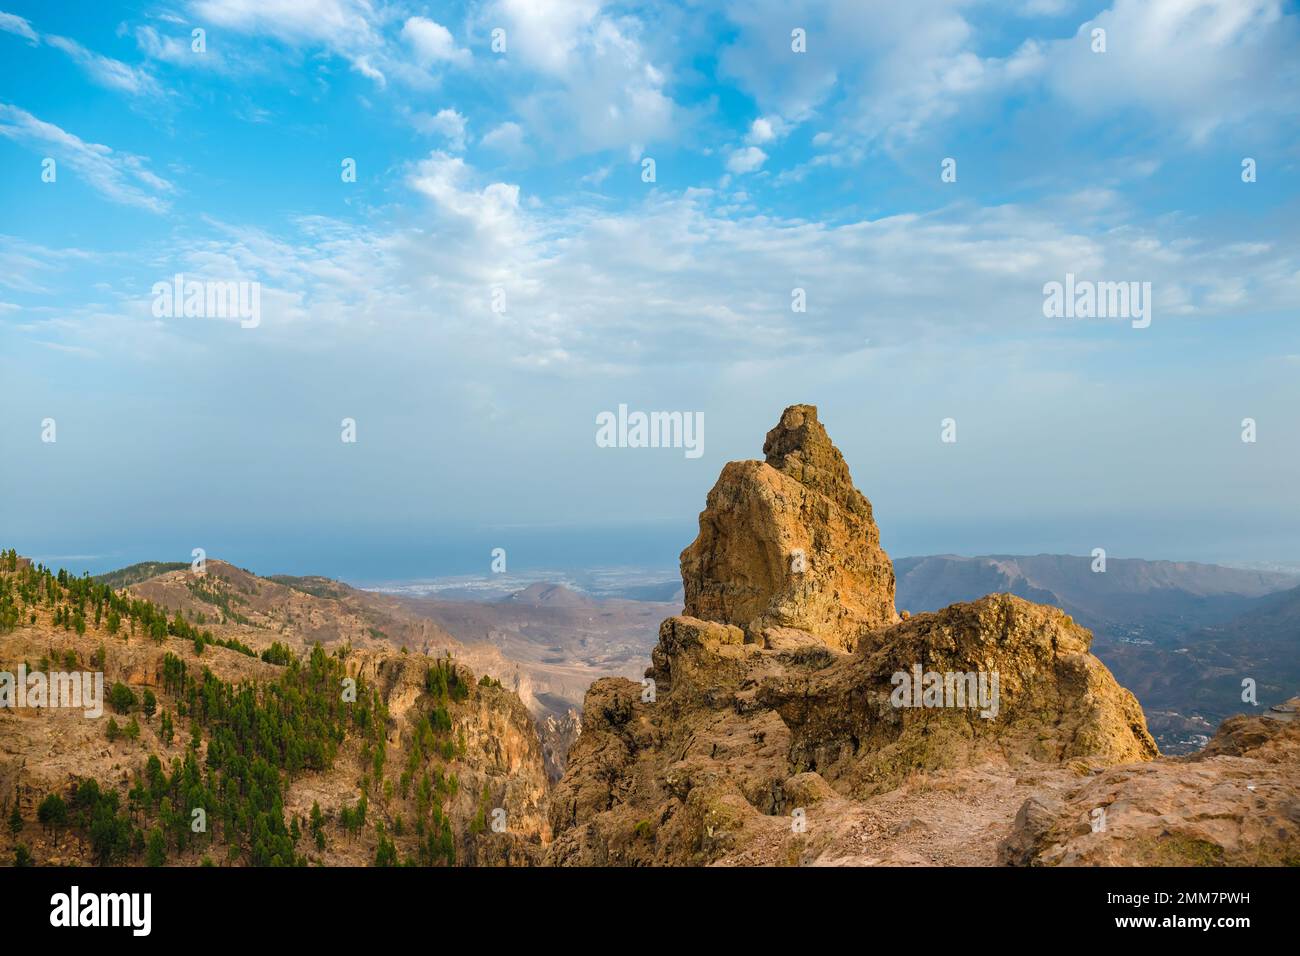 Pico de las Nives, landscape of the volcanic island of gran canaria Stock Photo